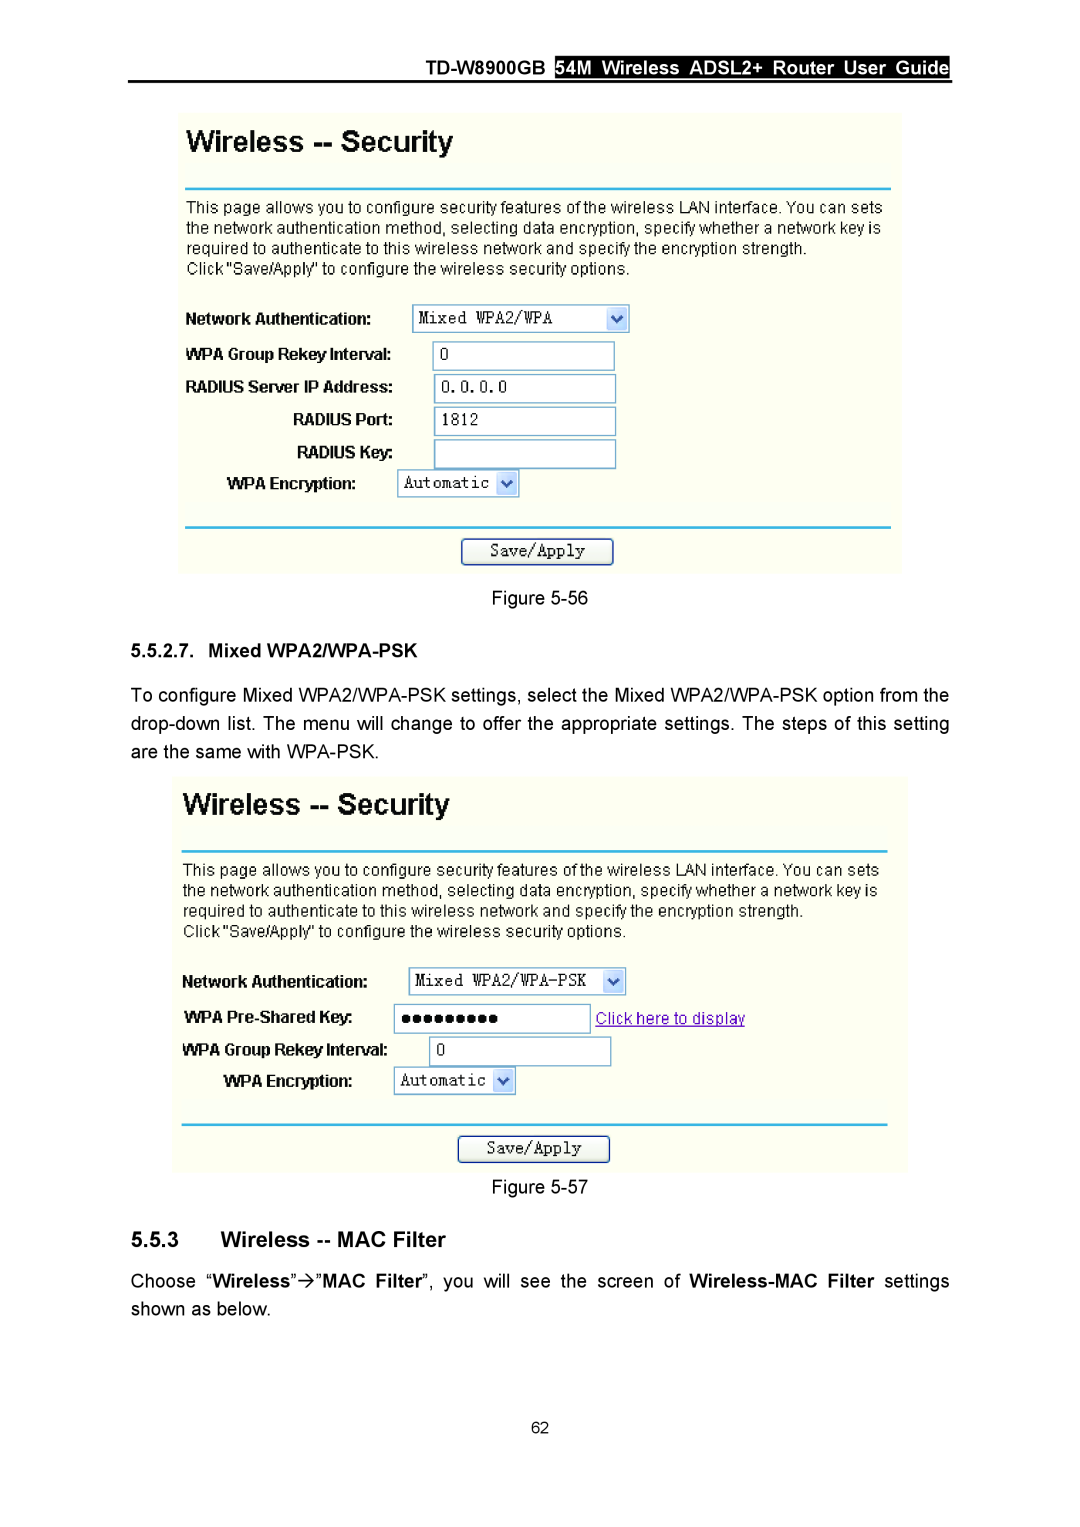 TP-Link manual Wireless -- MAC Filter, TD-W8900GB 54M Wireless ADSL2+ Router User Guide, Mixed WPA2/WPA-PSK 